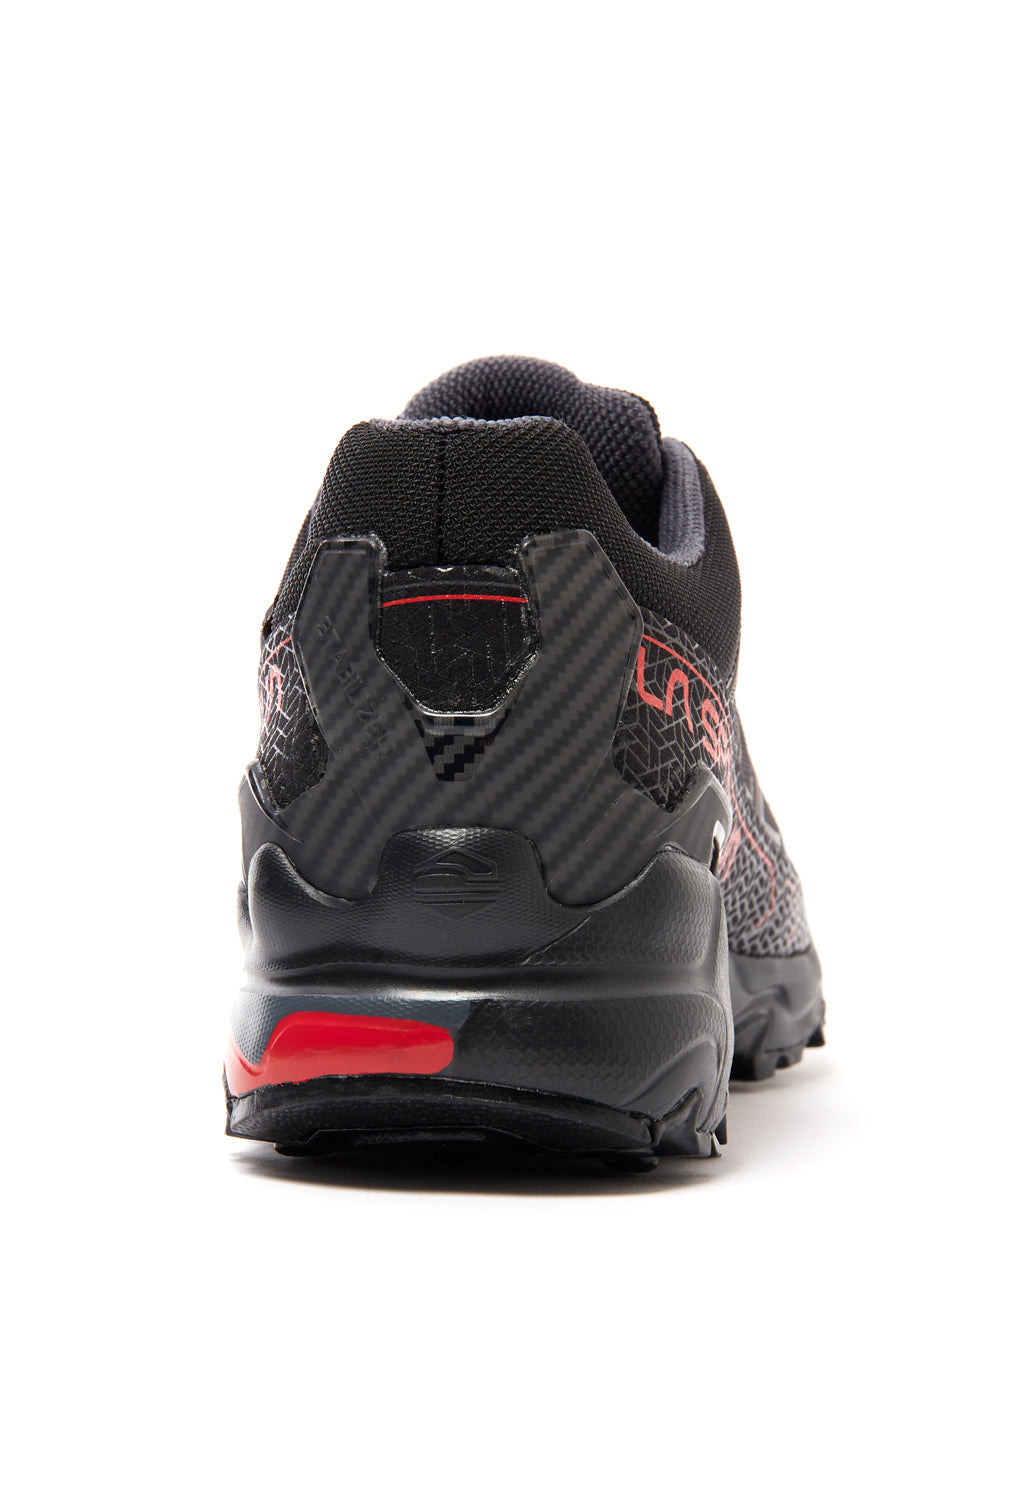 La Sportiva Ultra Raptor II GORE-TEX Men's Shoes - Black/Goji